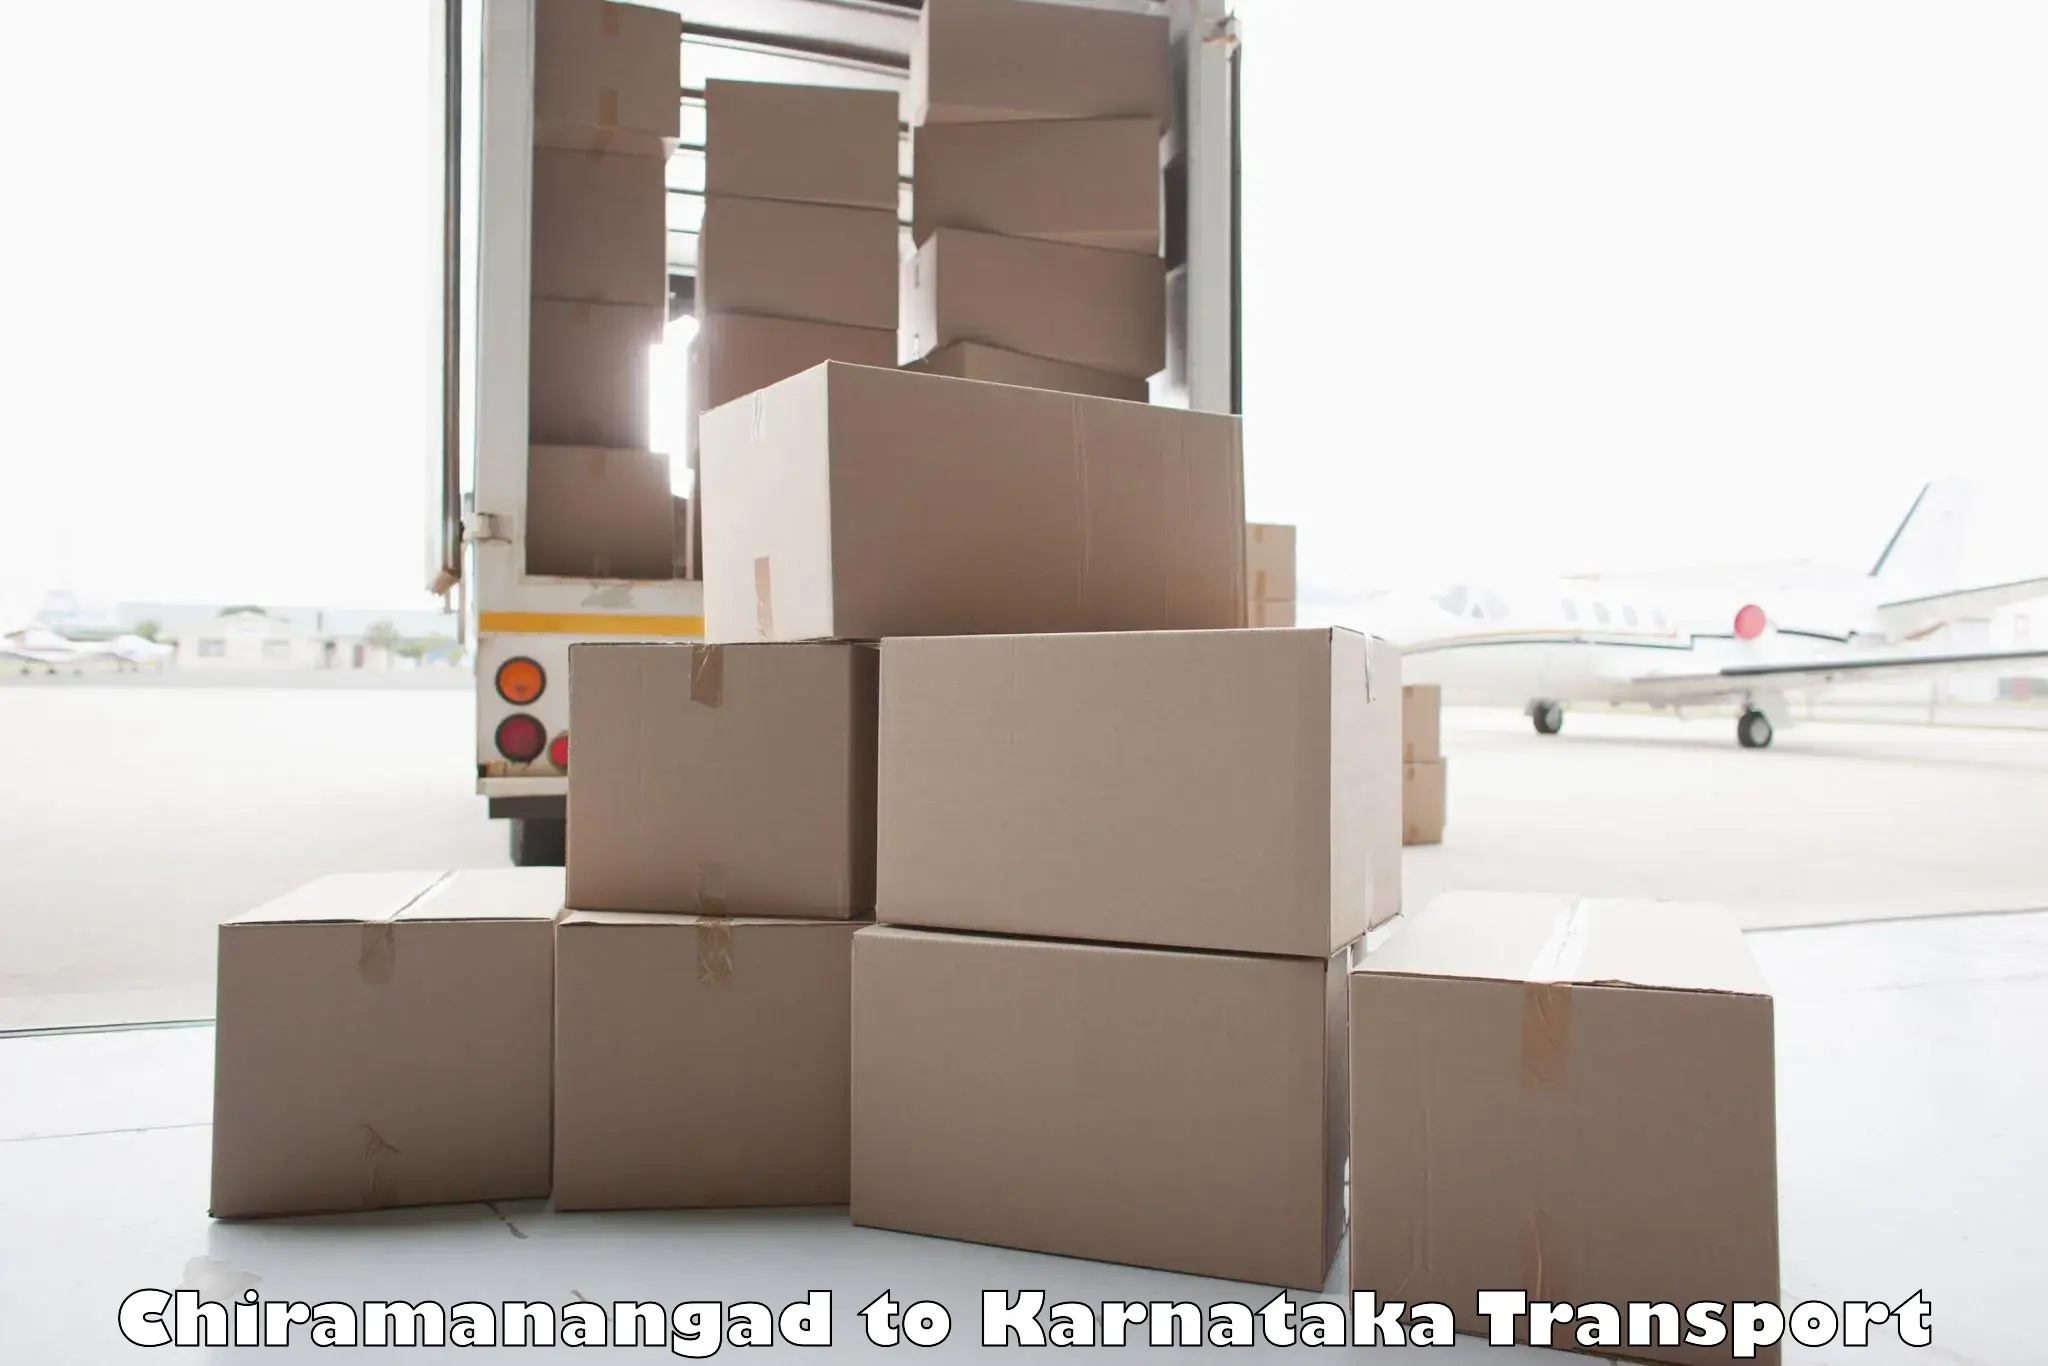 Furniture transport service Chiramanangad to Chikkaballapur